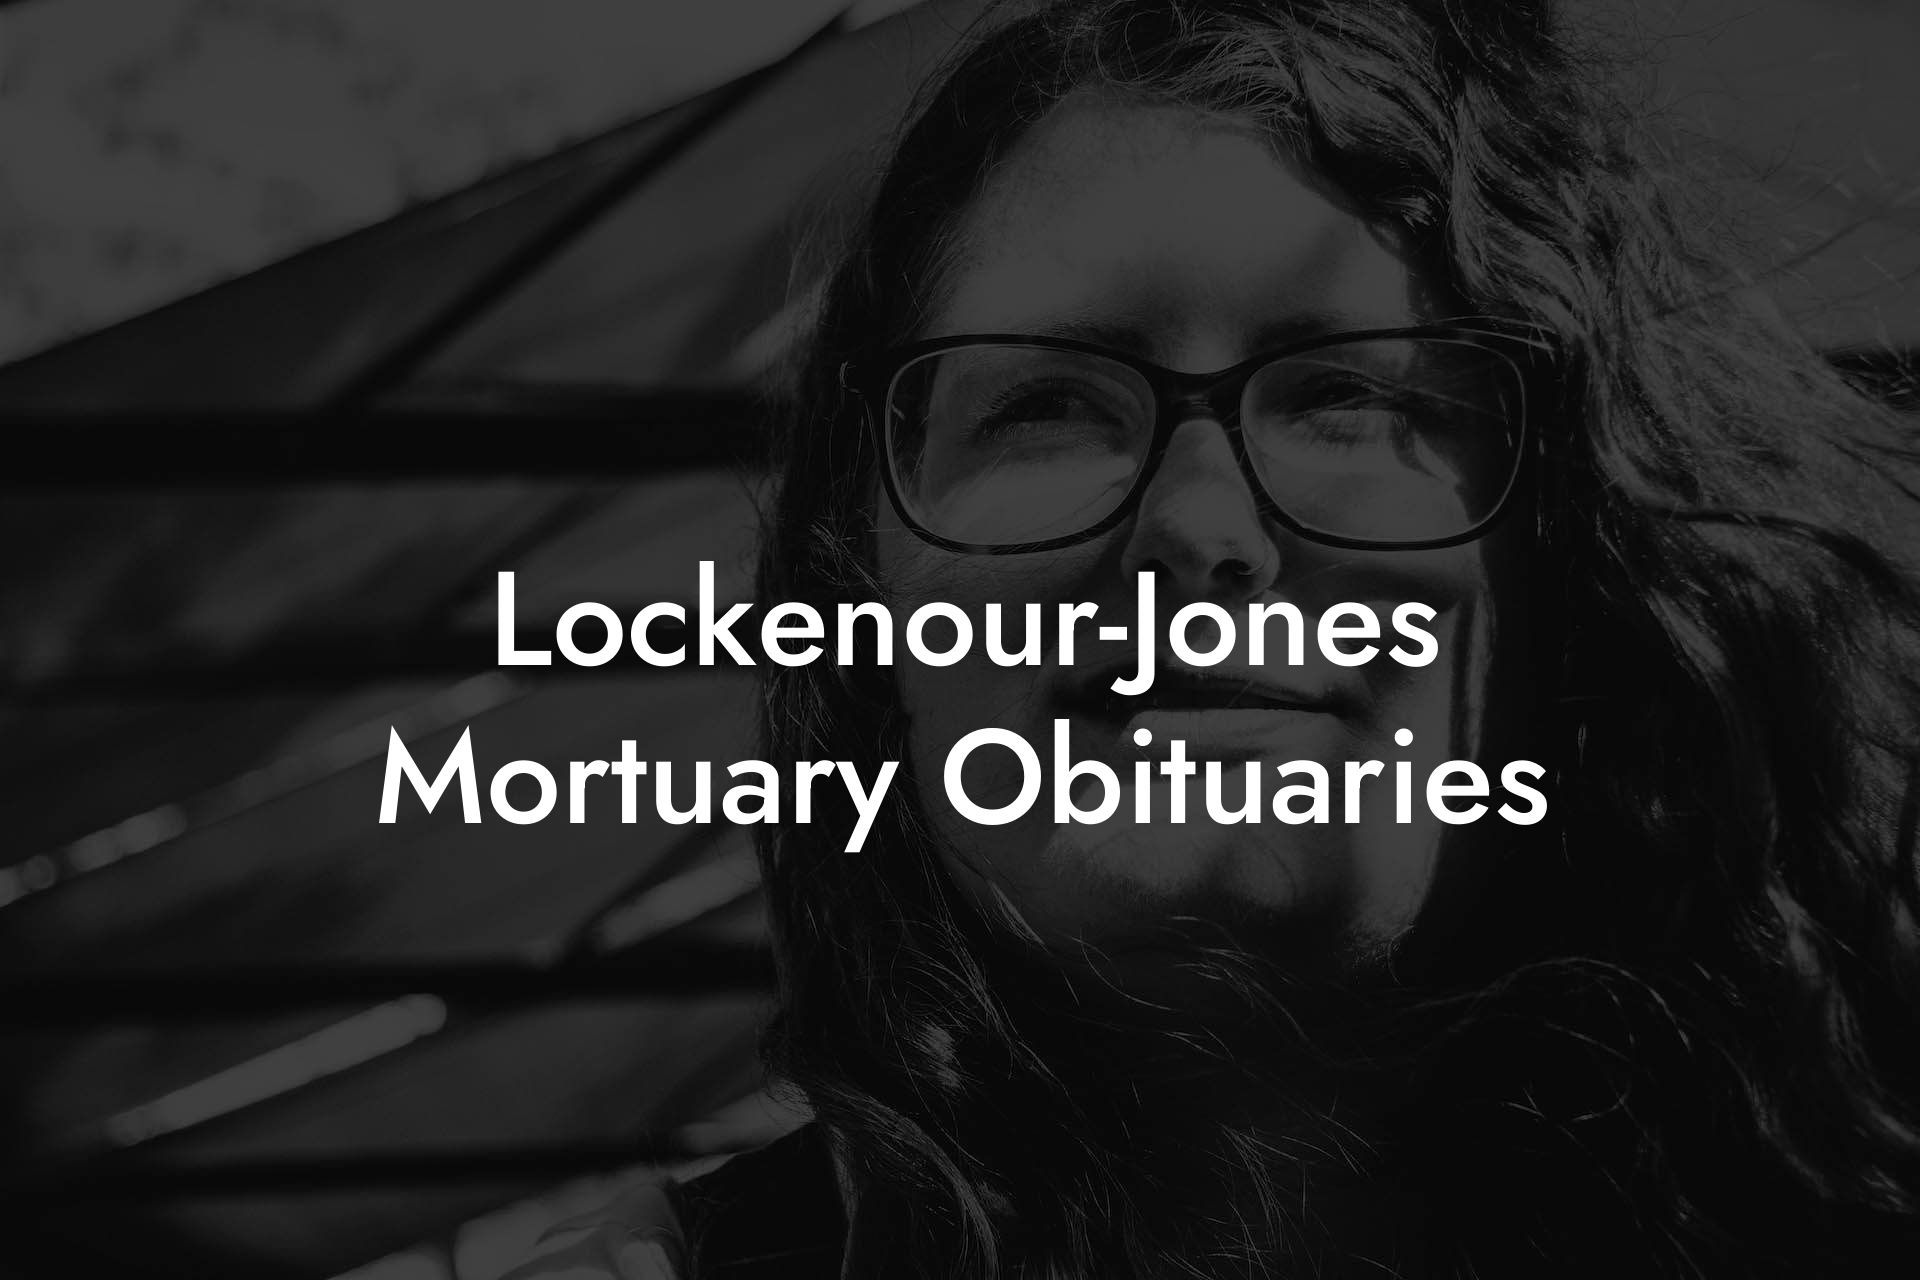 Lockenour-Jones Mortuary Obituaries